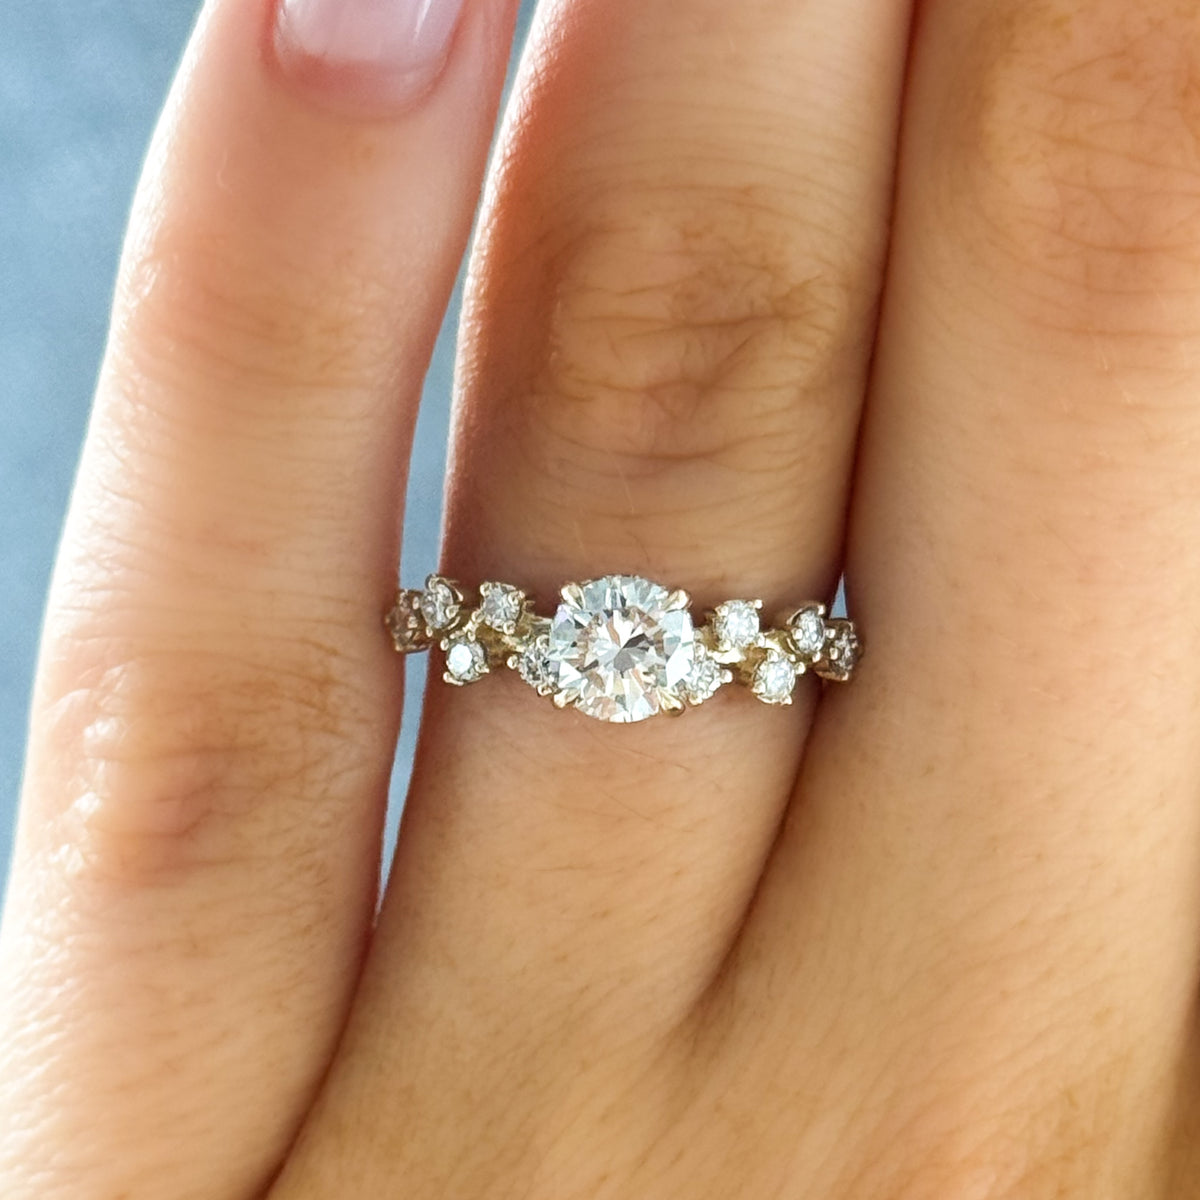 Starfire Engagement Ring with Round Cut Diamond